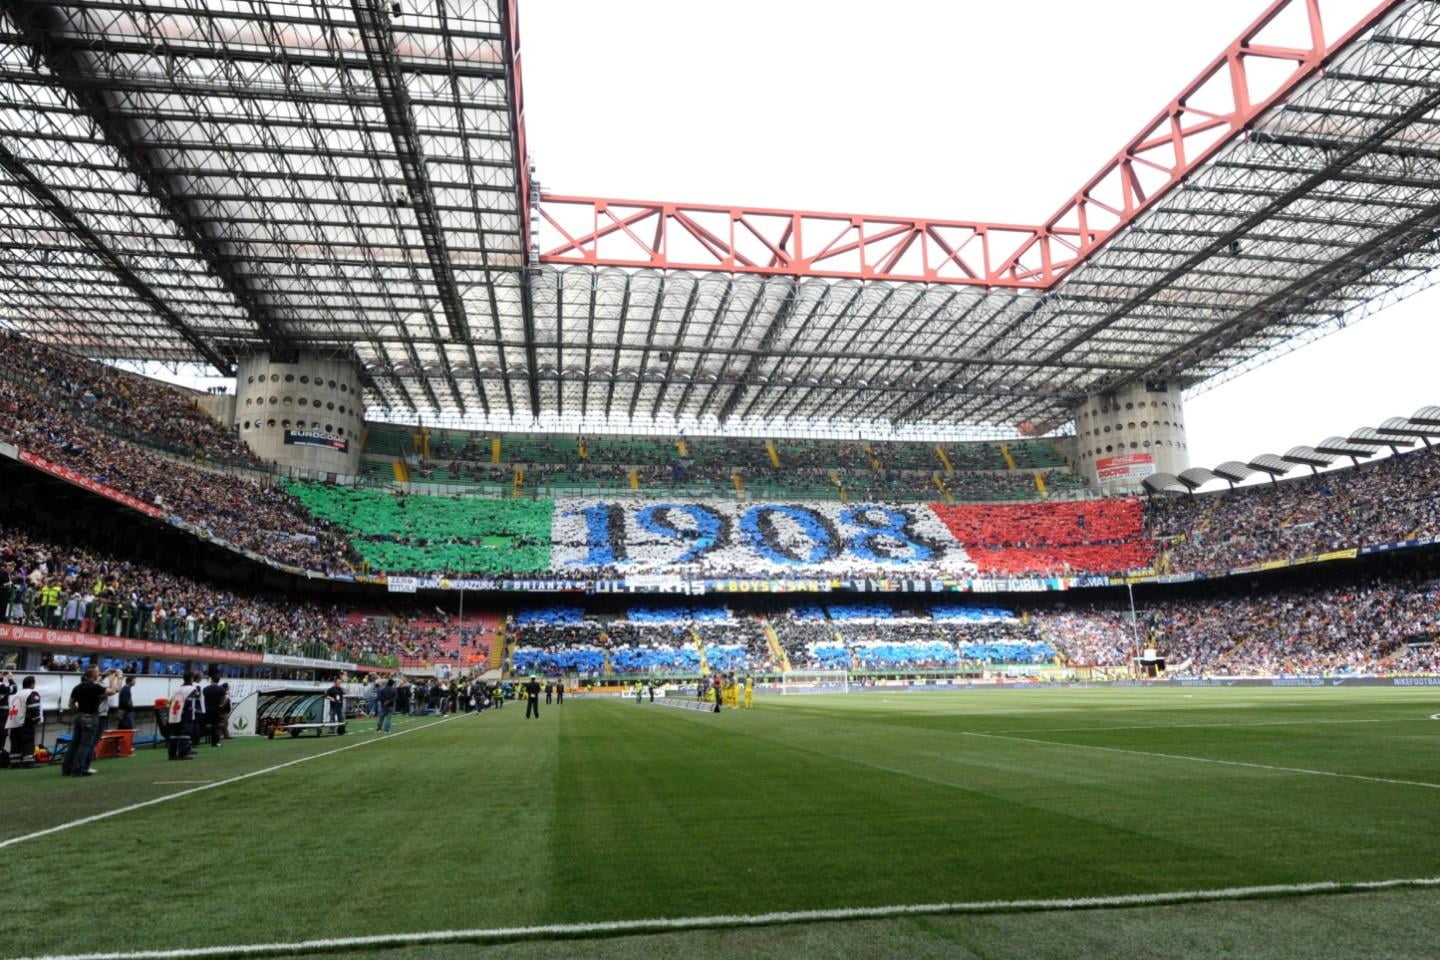 Inter Milan - Udinese, 6 februarkl. 20:45